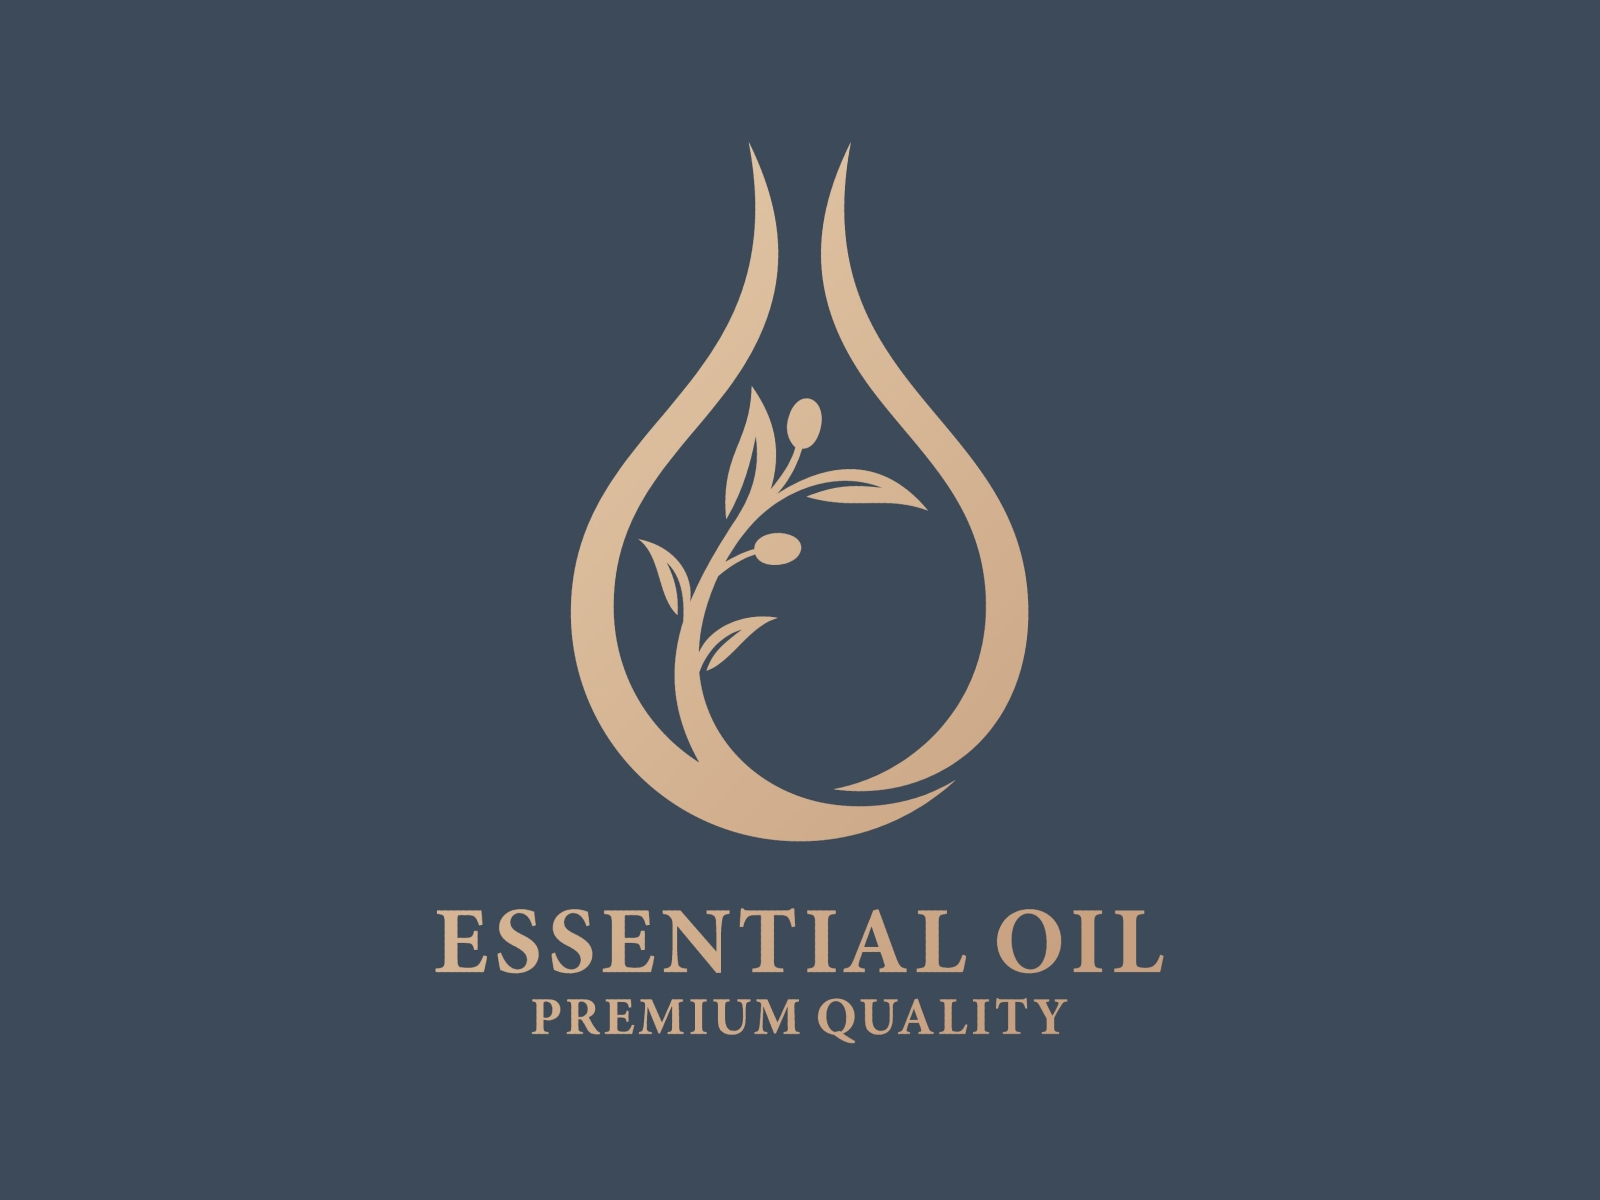 Hair oil logo Vectors  Illustrations for Free Download  Freepik